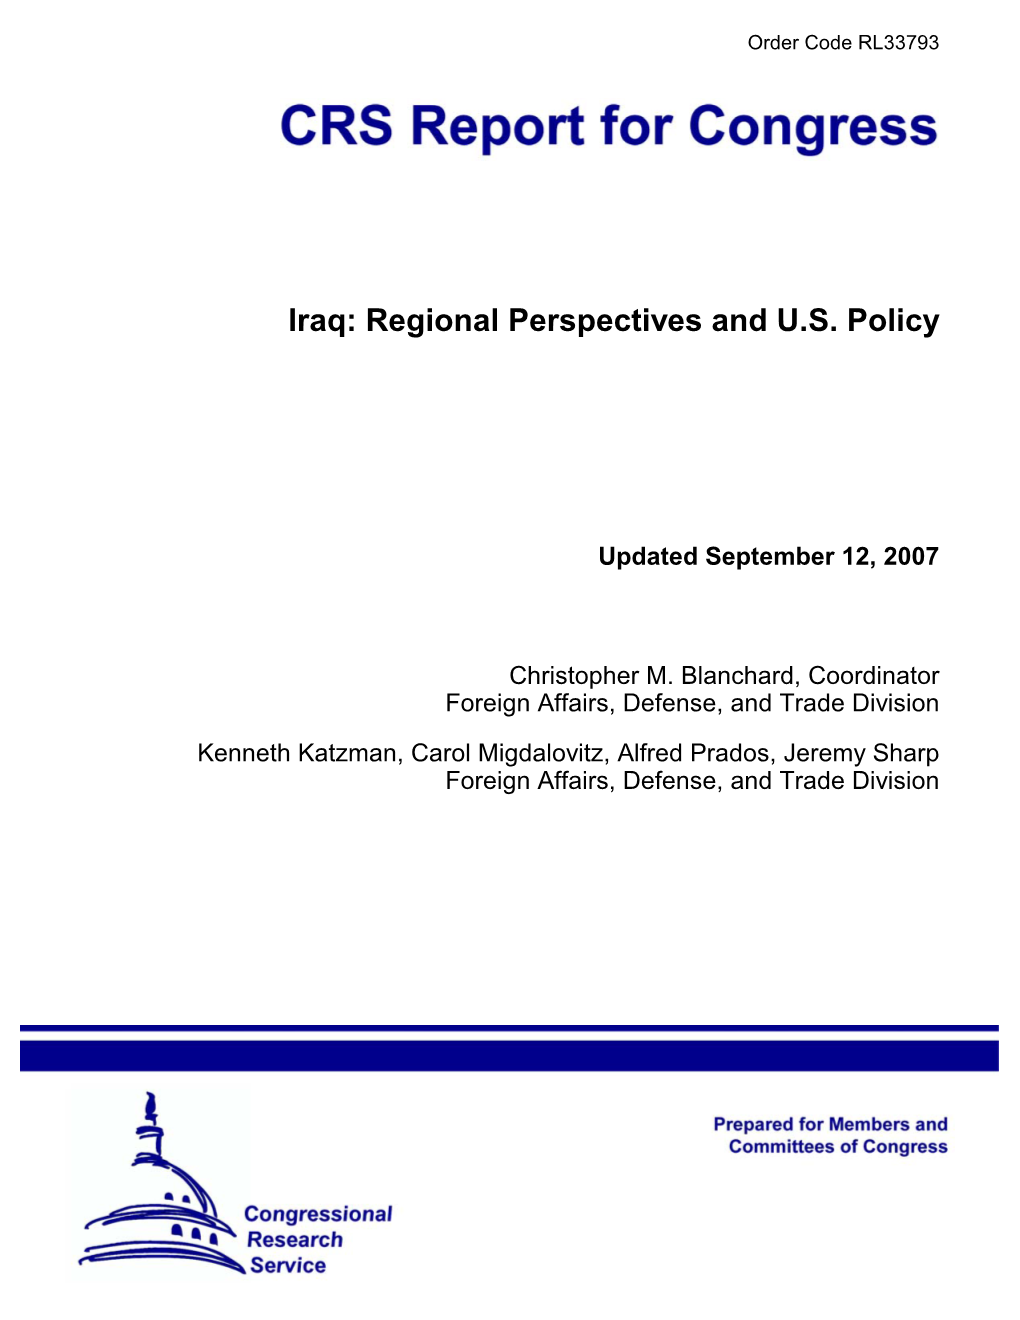 Iraq: Regional Perspectives and U.S